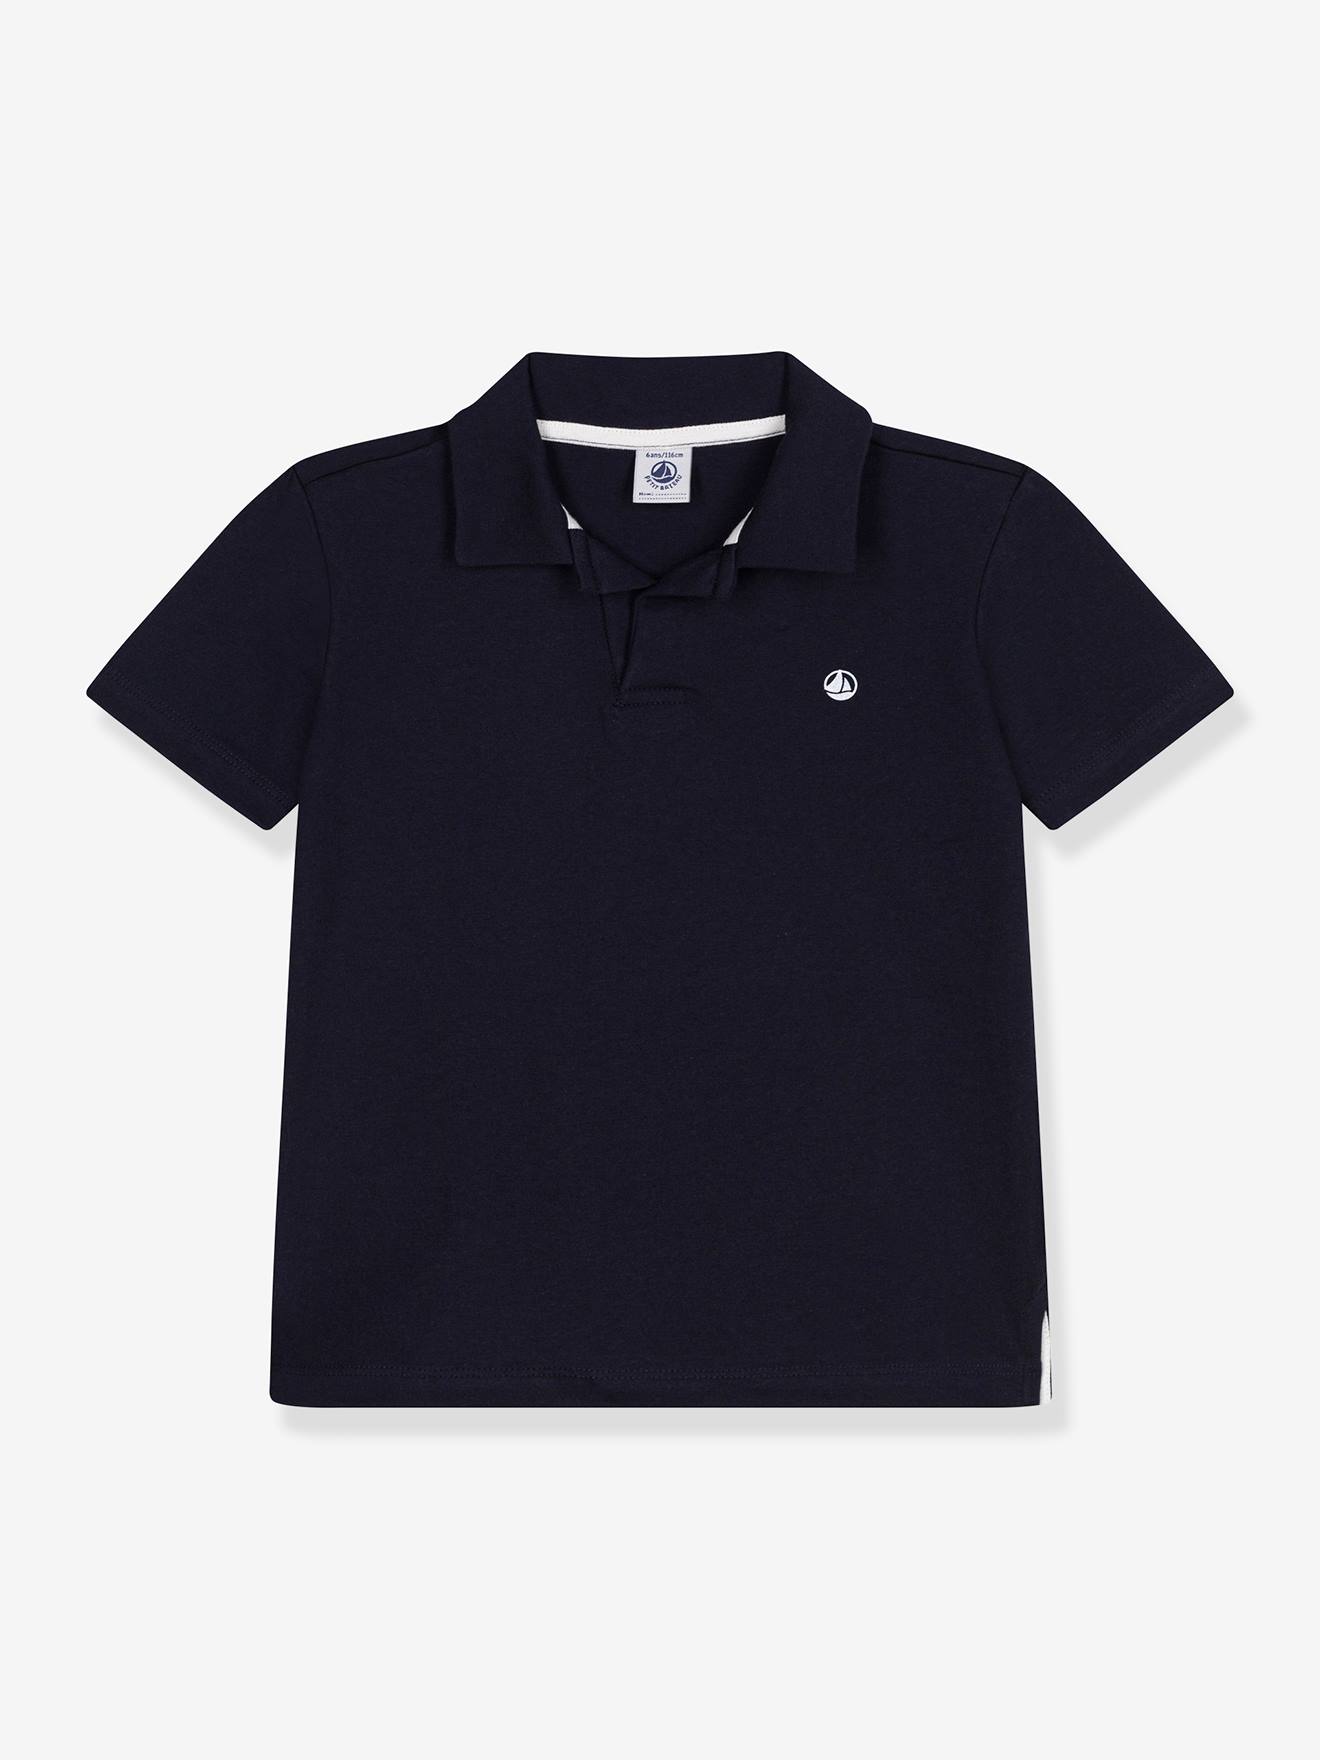 Short Sleeve Polo Shirt for Boys, by PETIT BATEAU navy blue